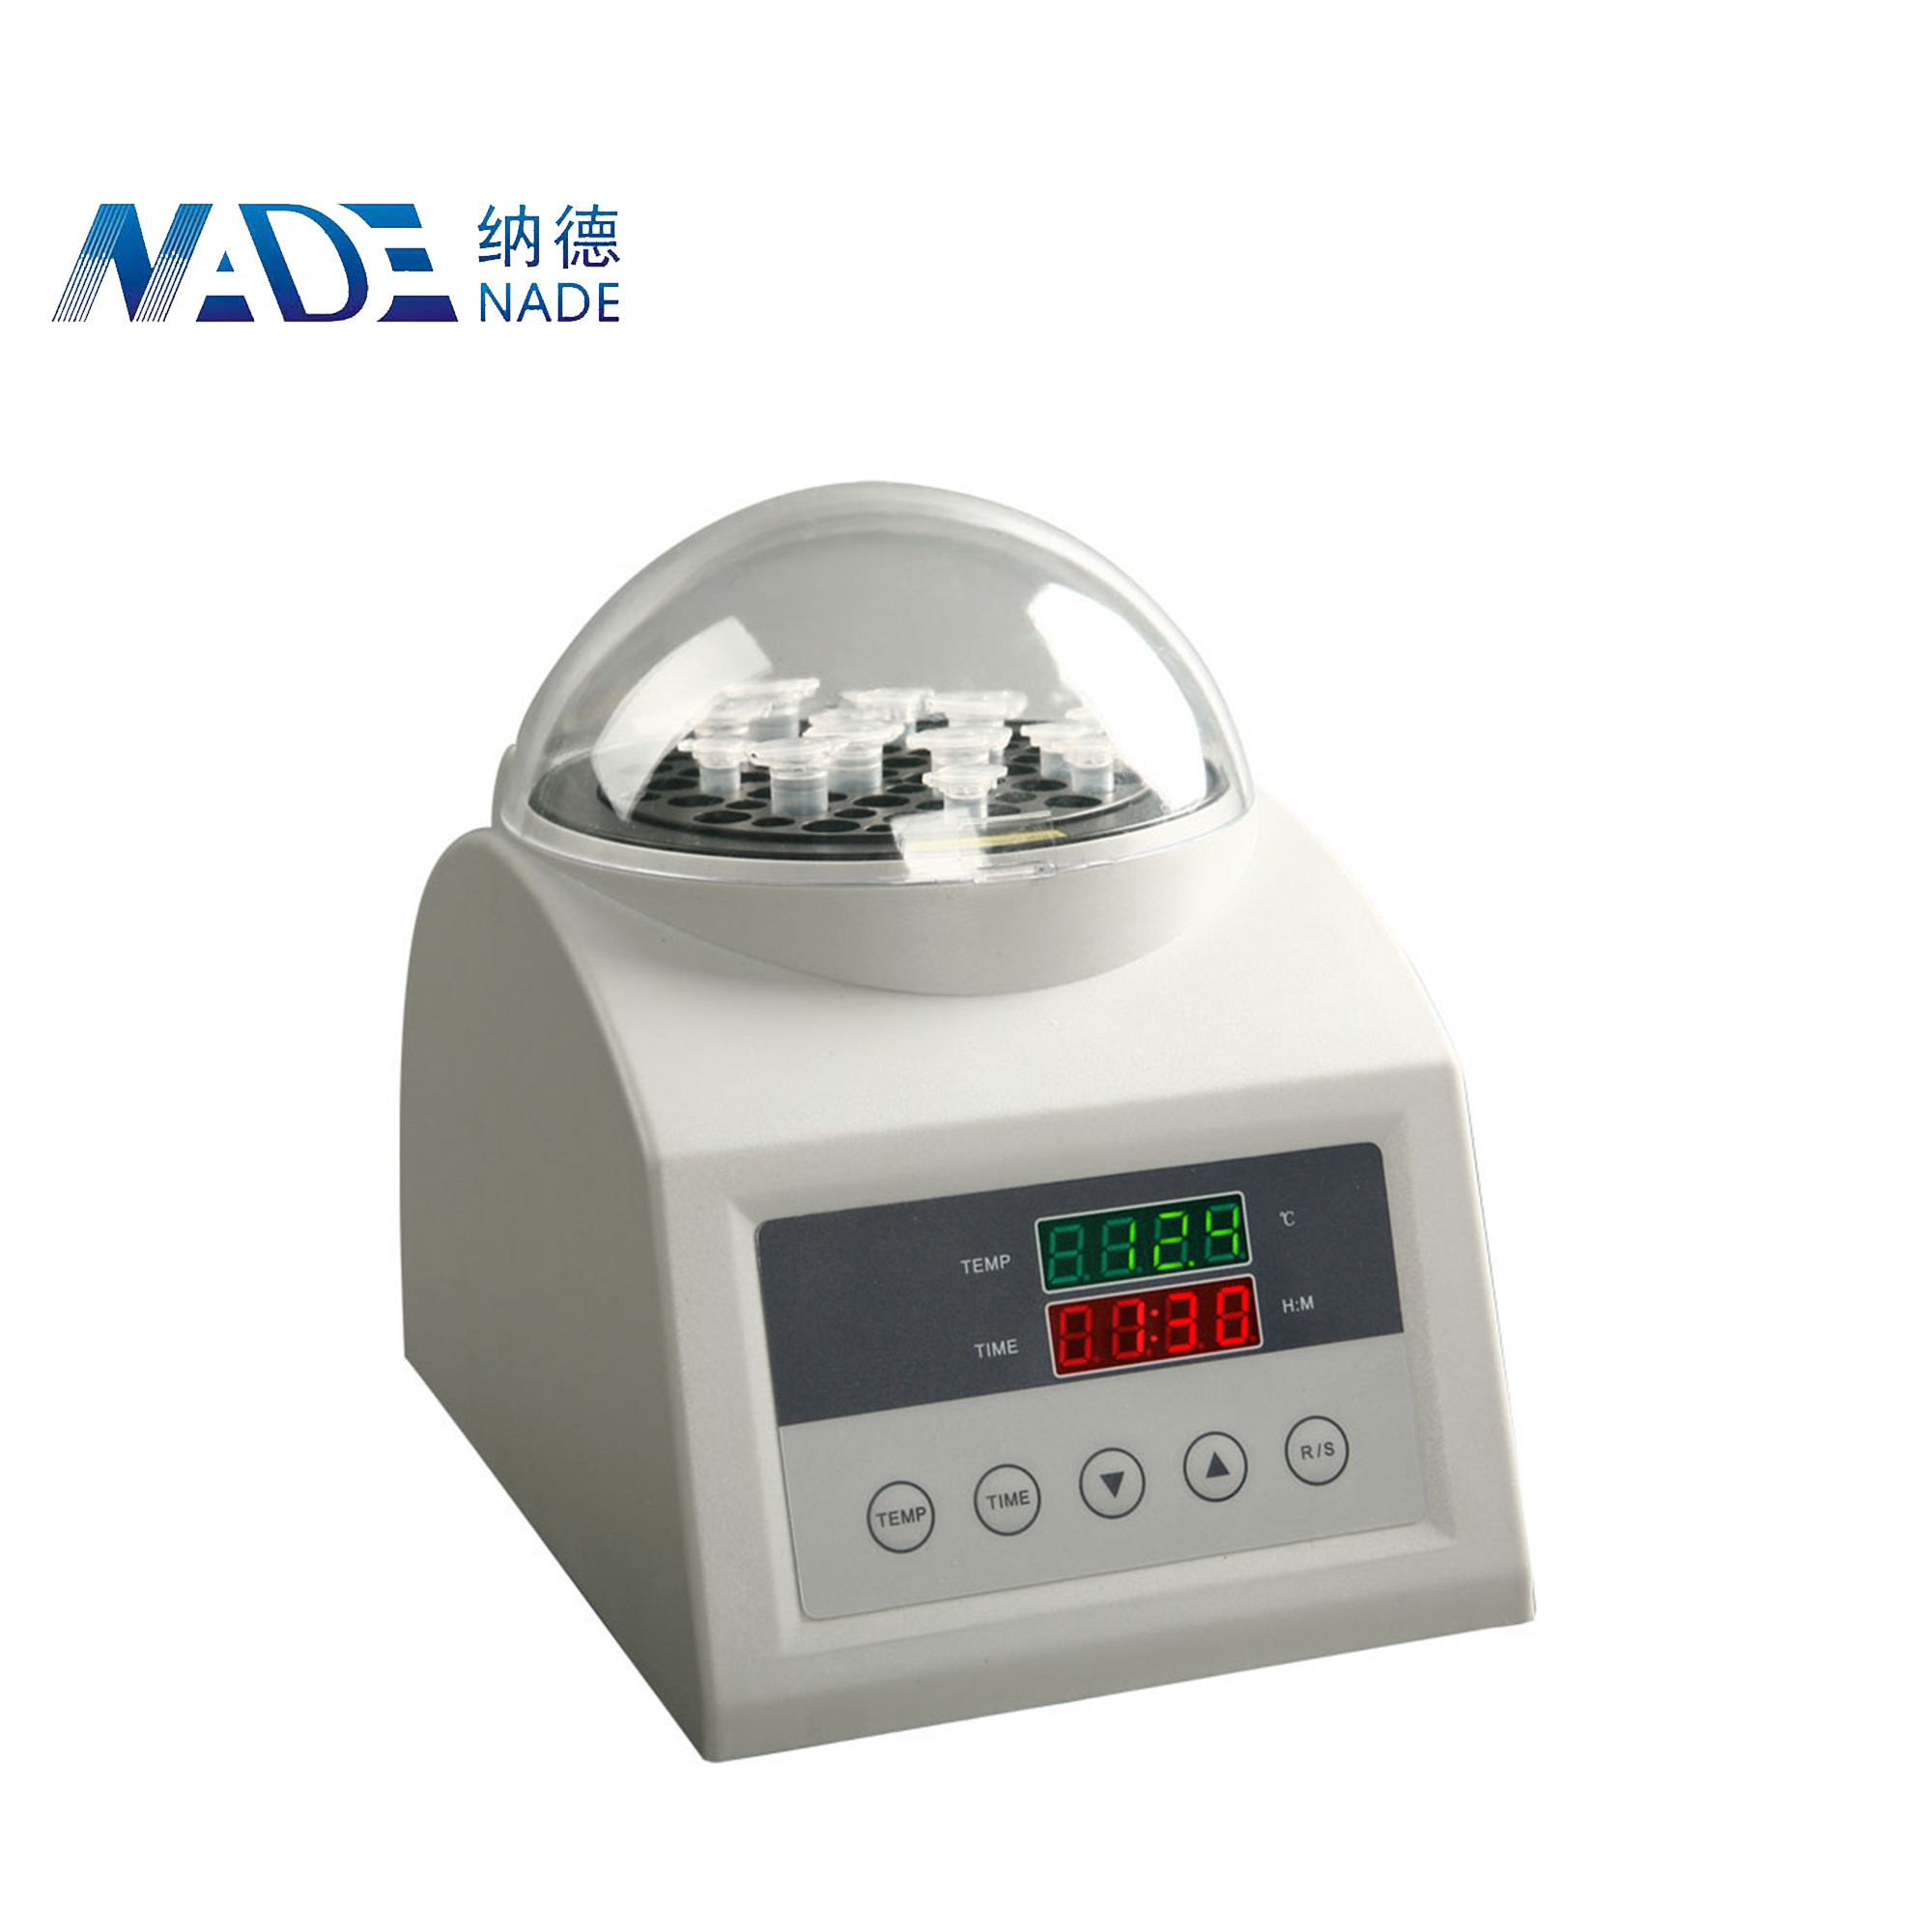 Nade Economical Dry Bath Incubator K30 RT+5 to 100 C Dry Block Heaters